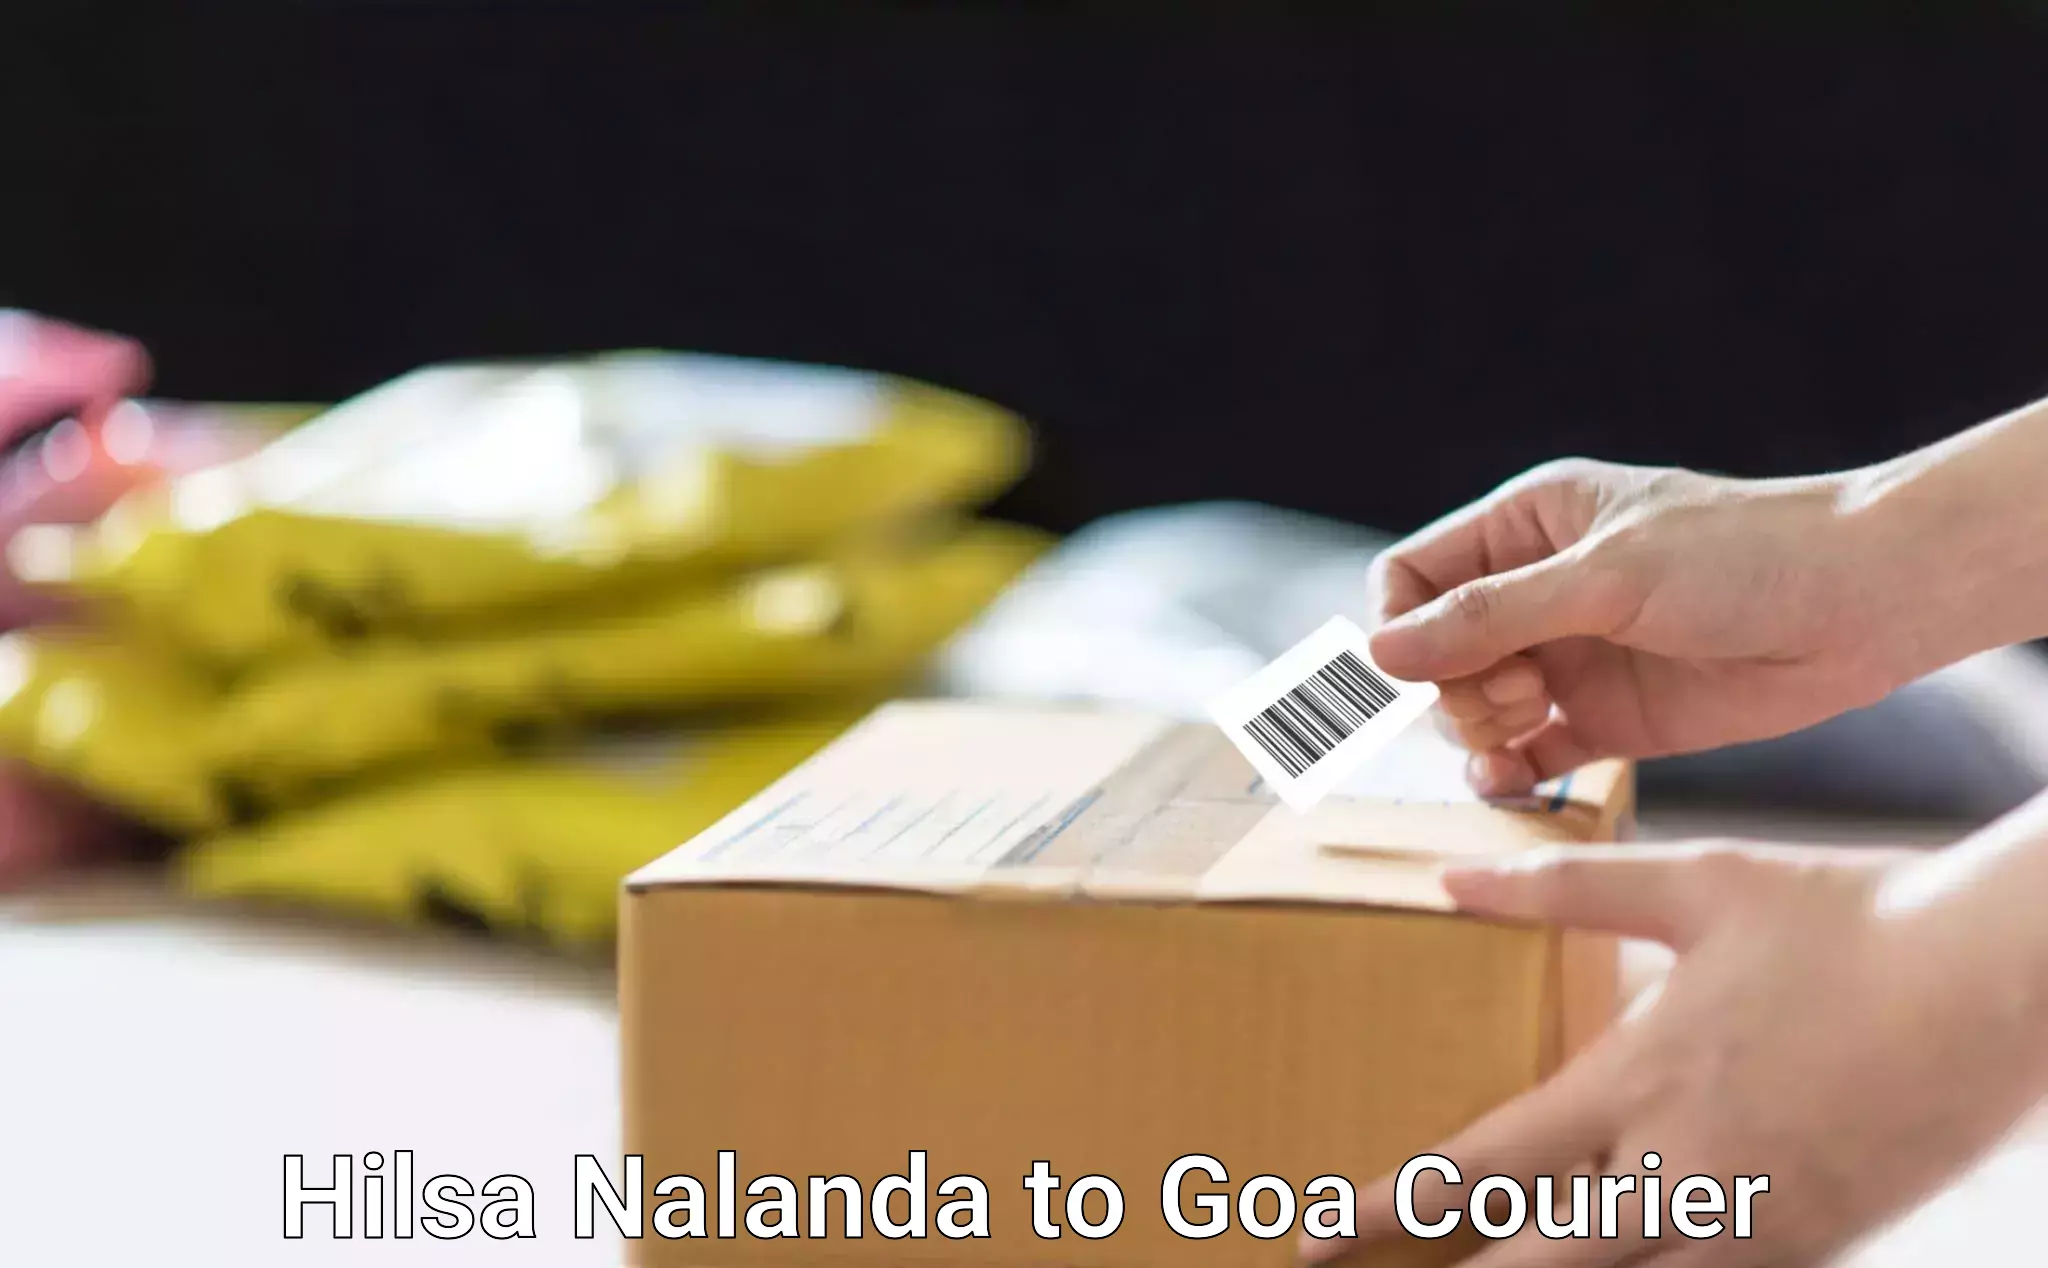 Furniture delivery service Hilsa Nalanda to South Goa